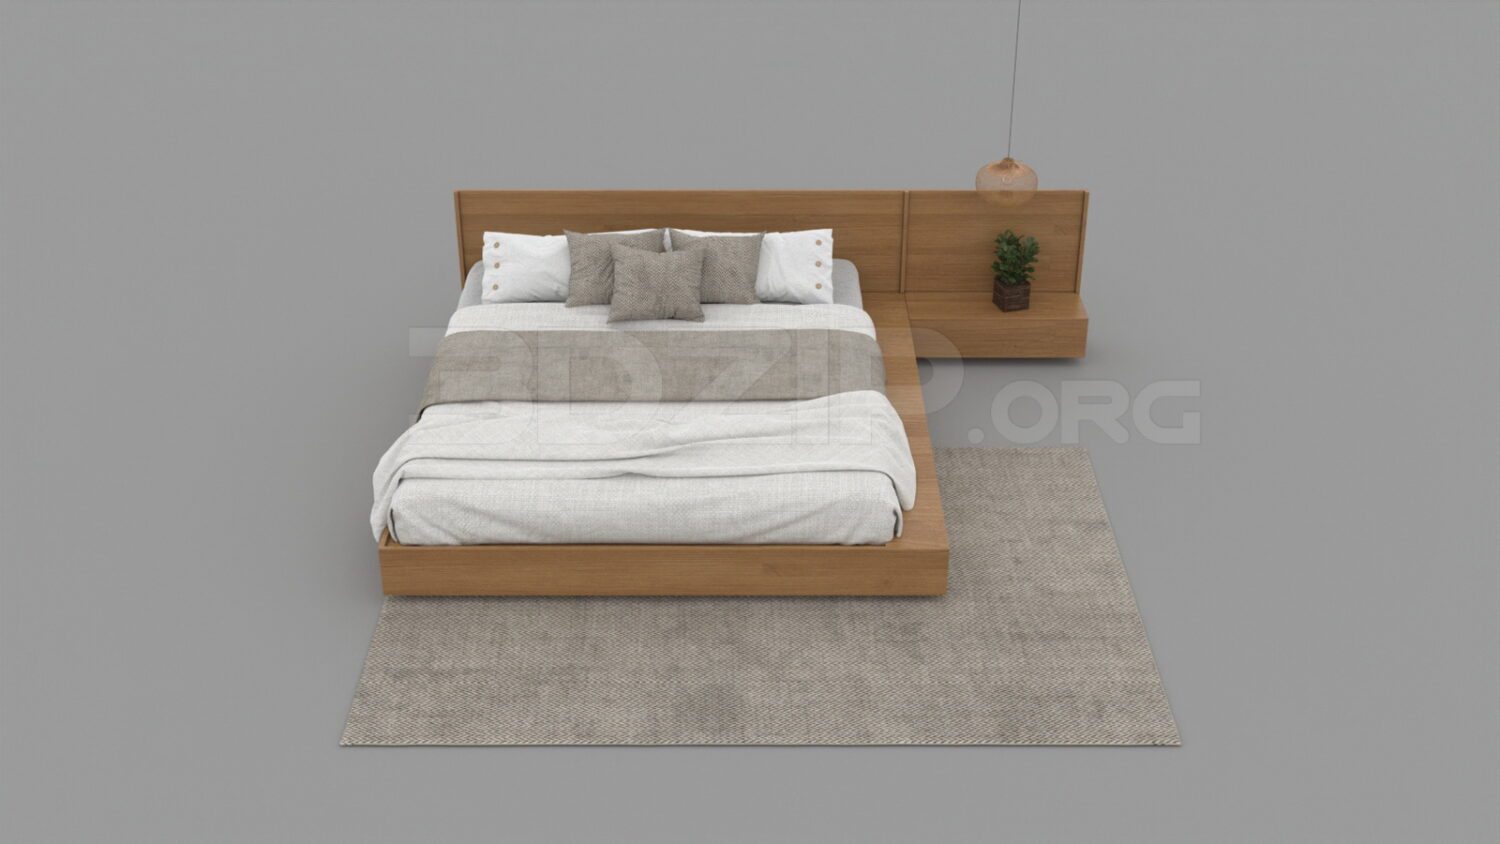 3473. Free 3D Bed Model Download